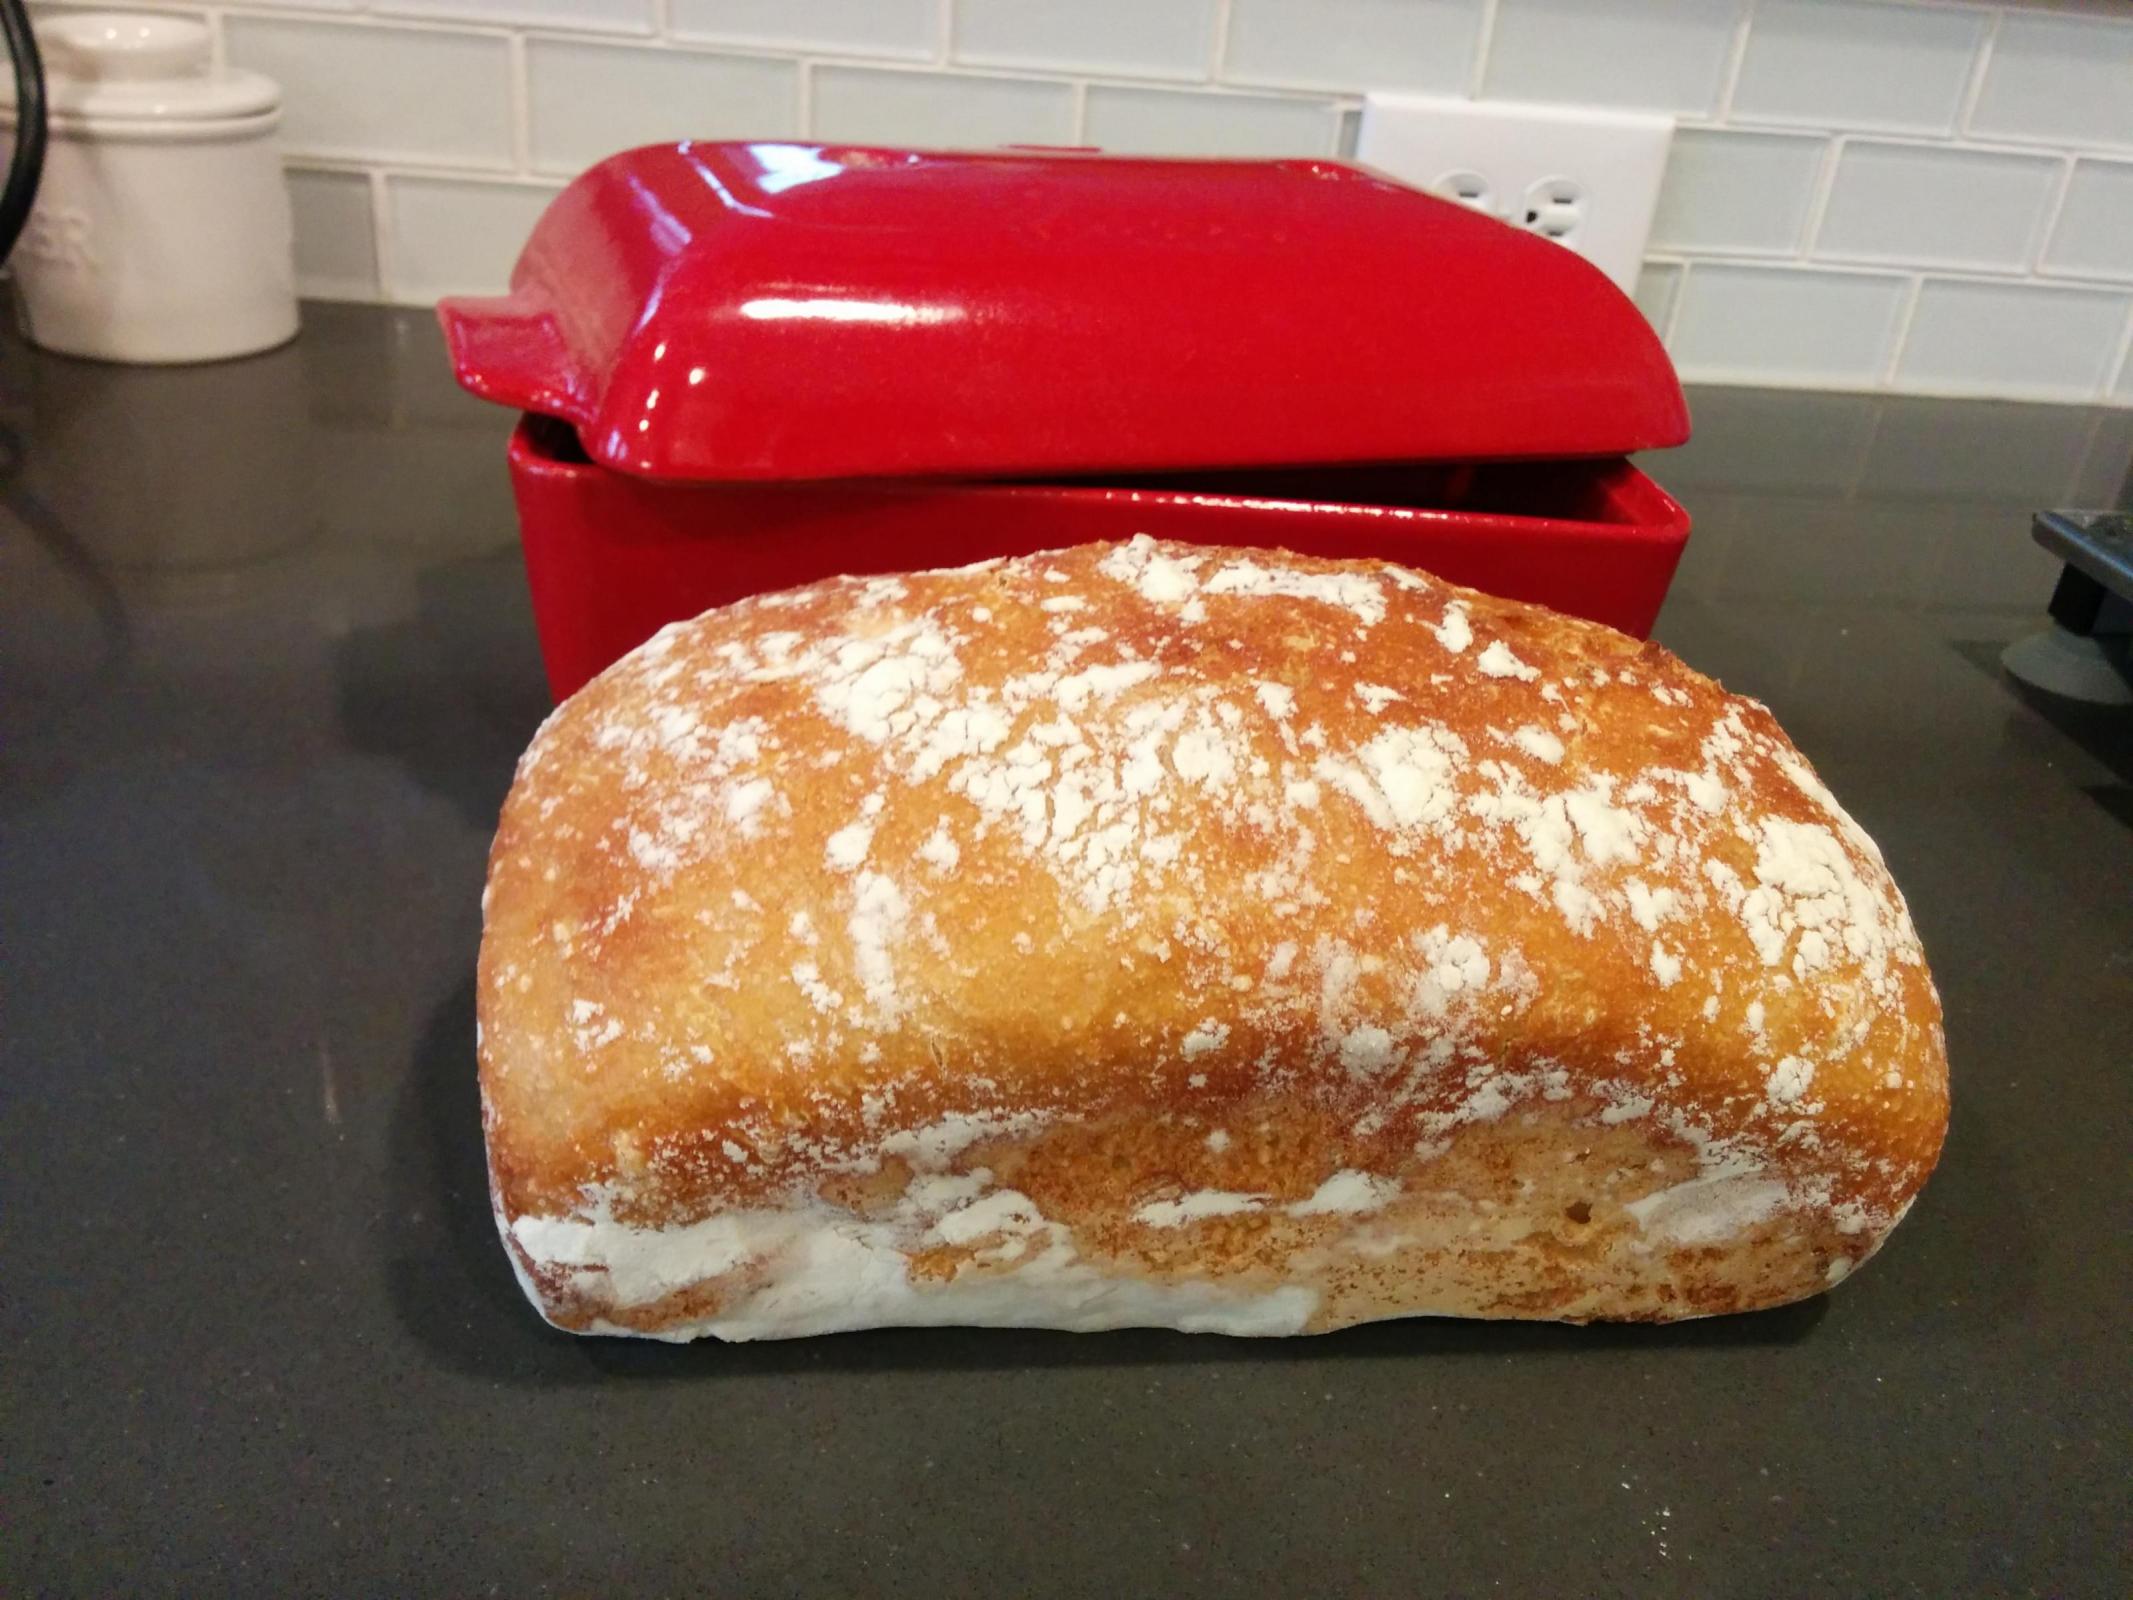 Emile Henry Italian Bread Loaf Baker